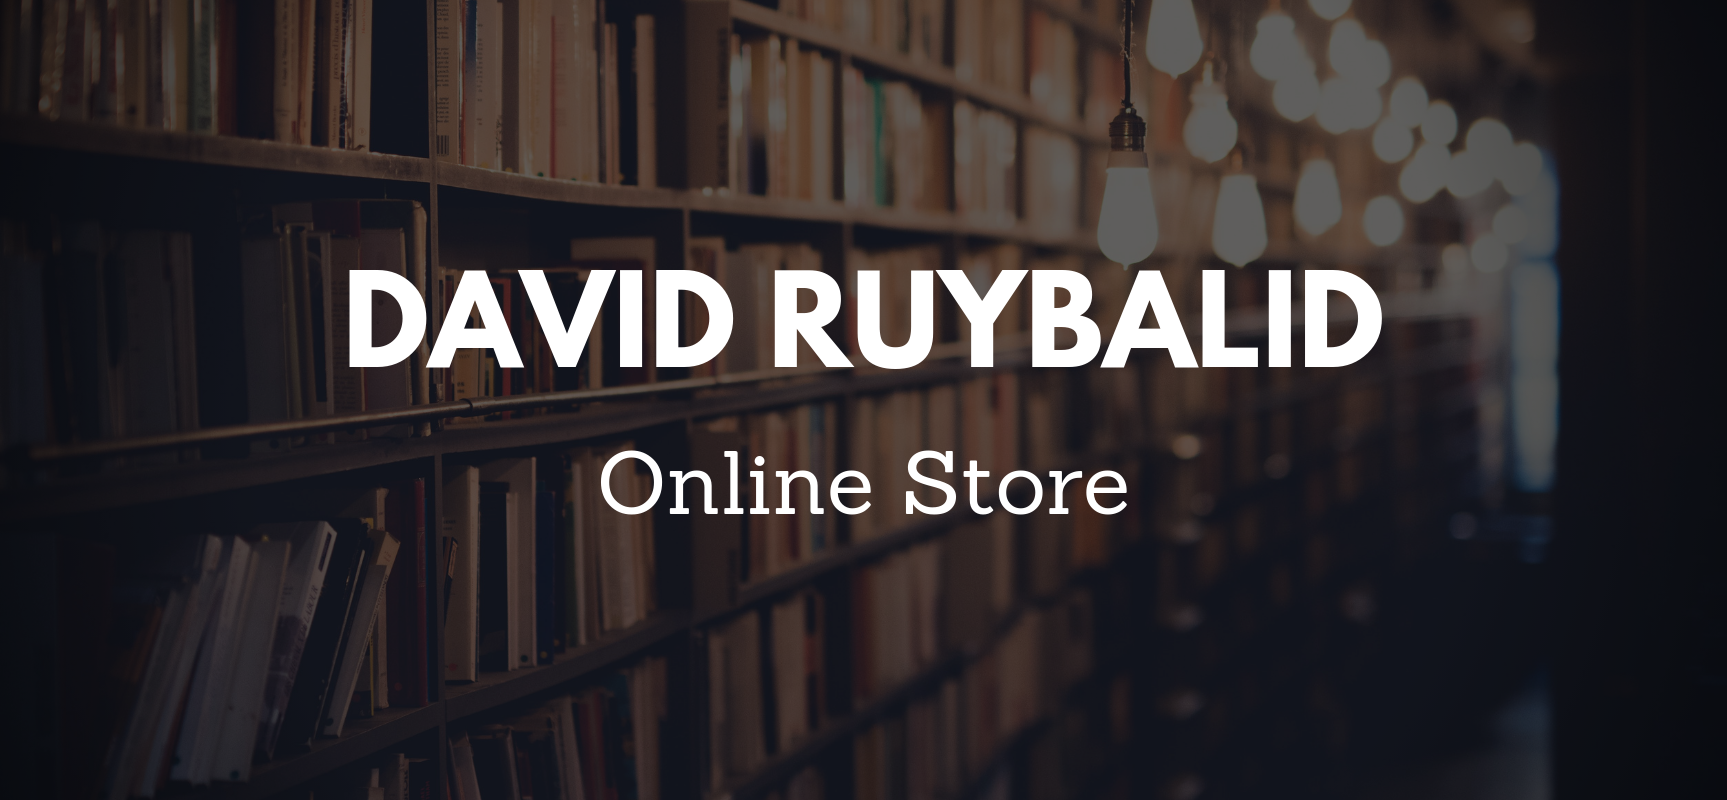 David Ruybalid